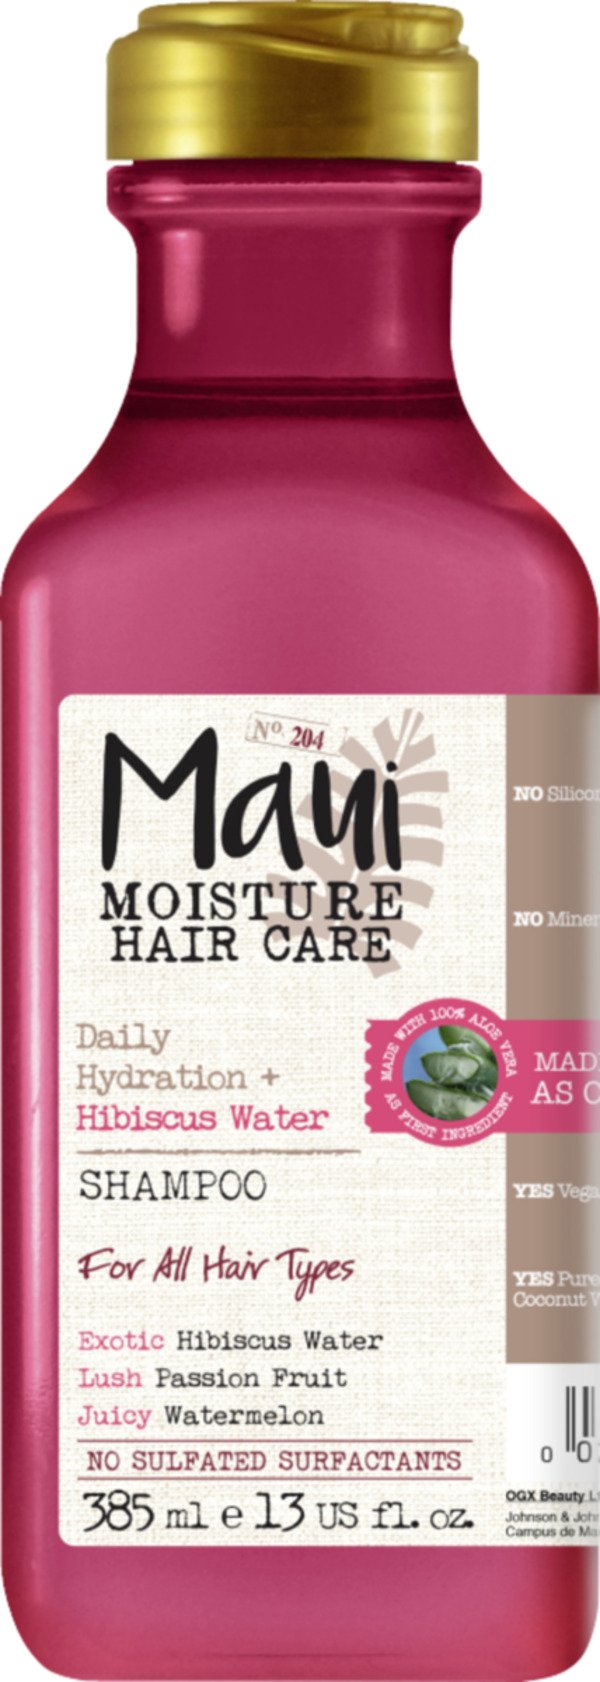 Bild 1 von Maui Moisture Hair Care Daily Hydration + Hibiscus Water Shampoo